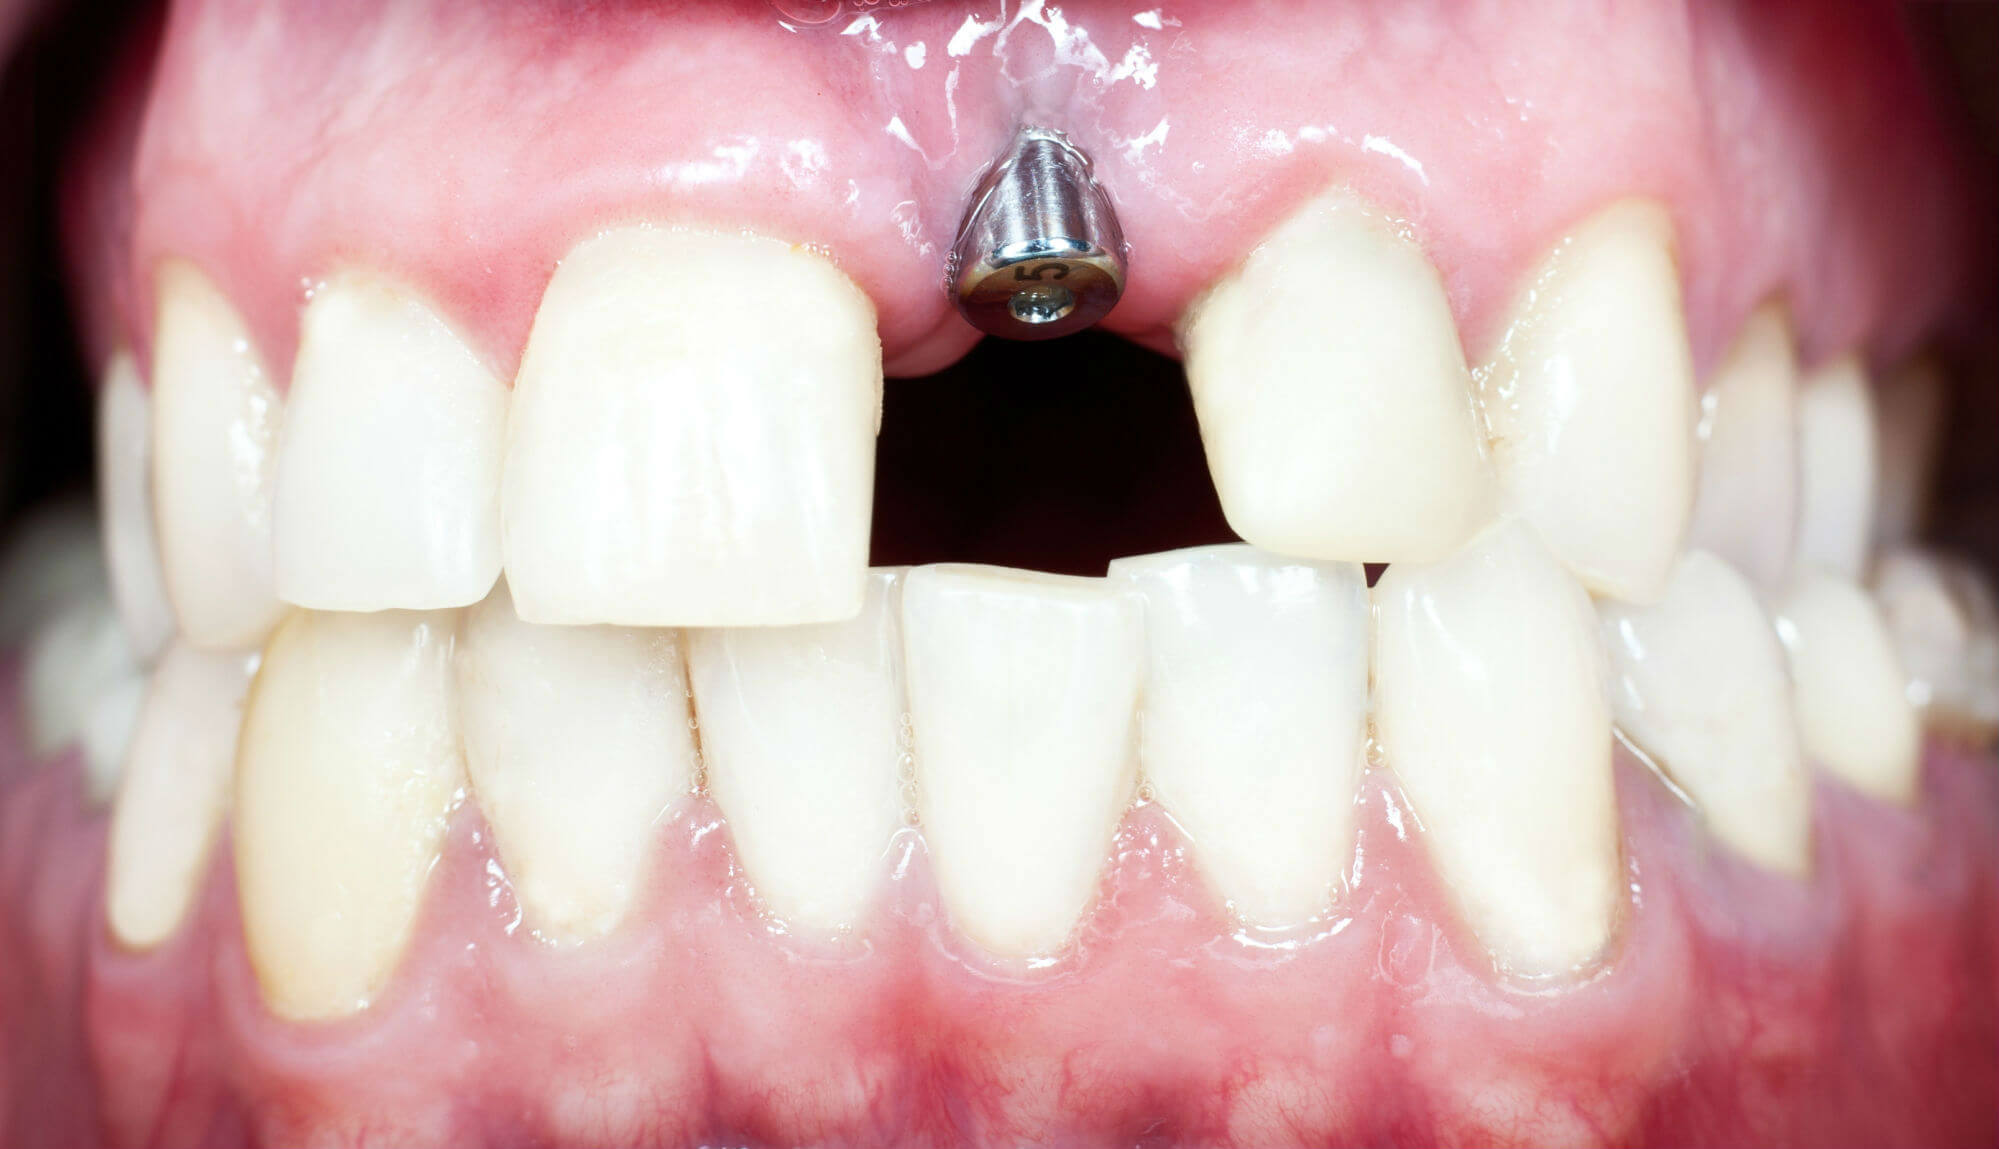 Имплантация зубов в зоне улыбки